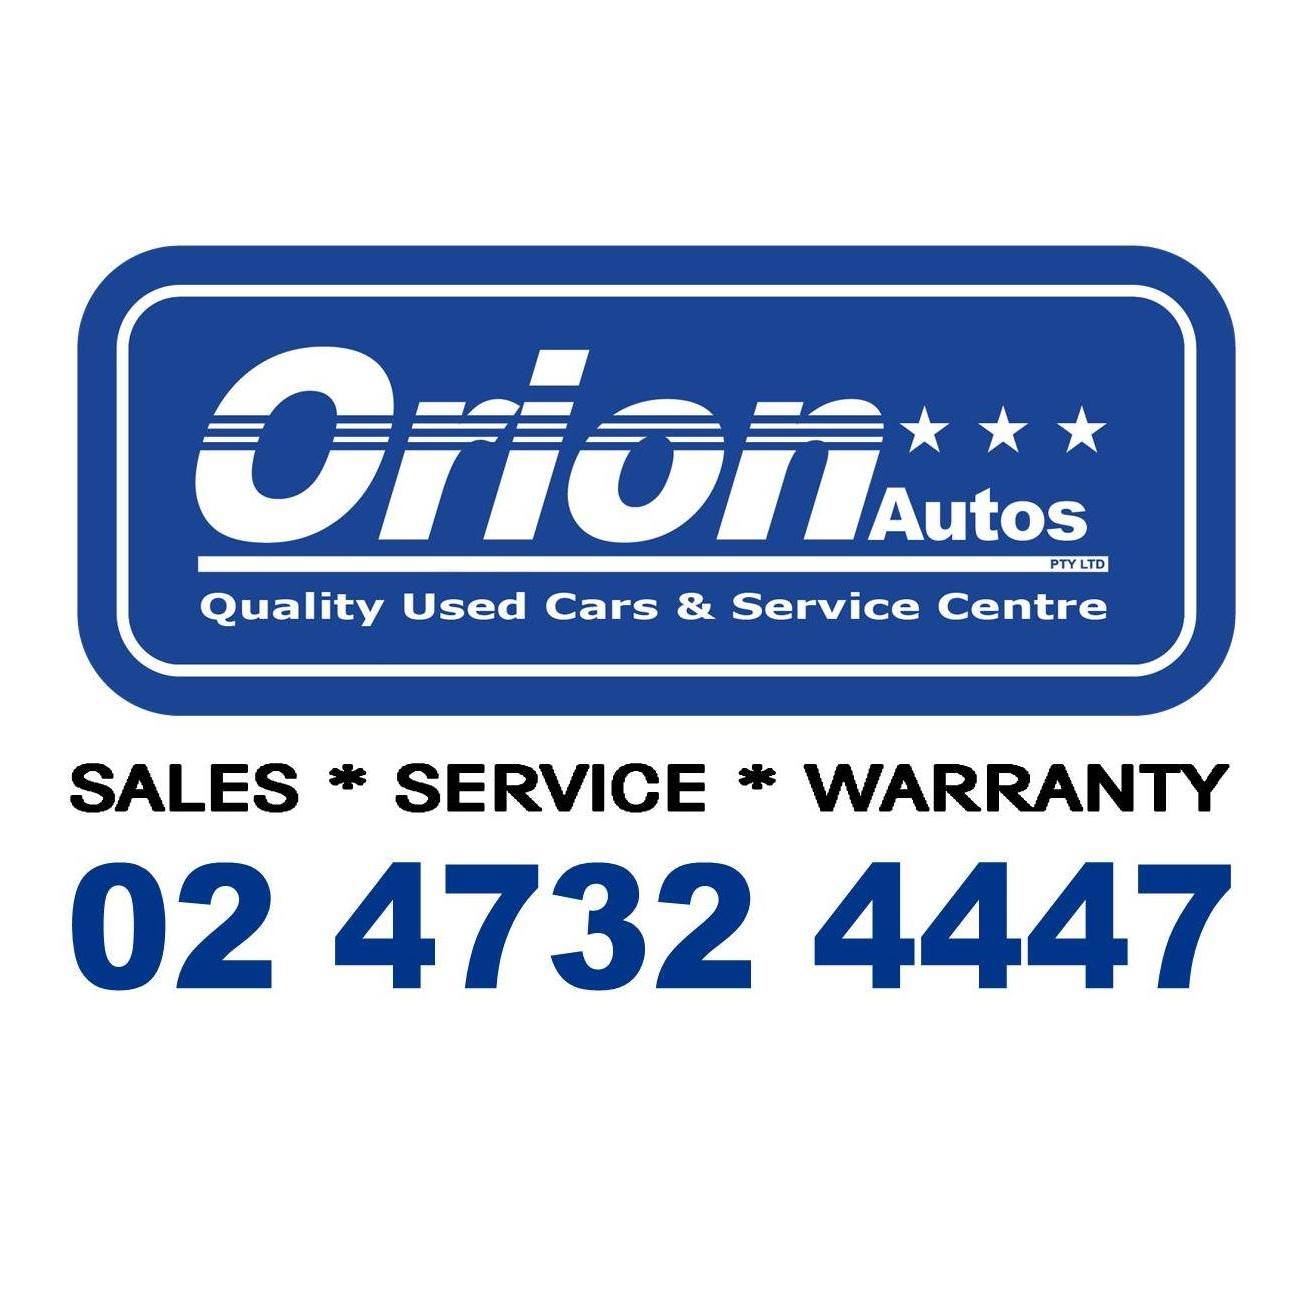 Orion Autos